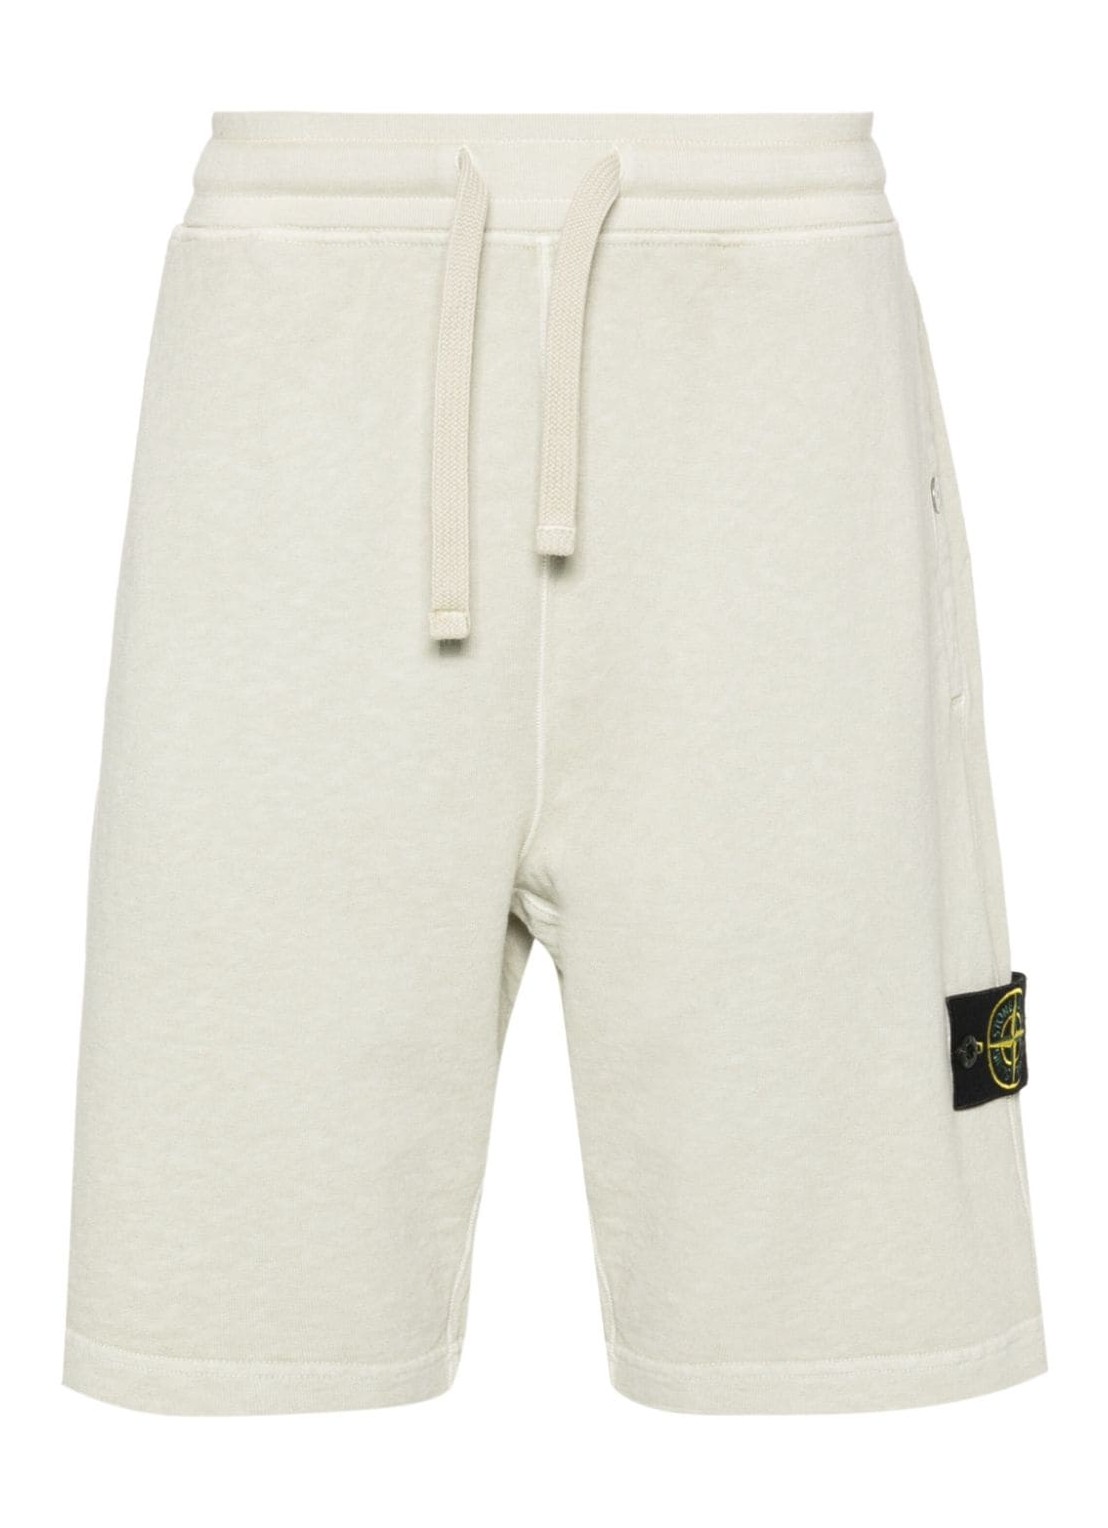 Pantalon corto stone island short pant manfleece shorts - 801563460 v0151 talla S
 